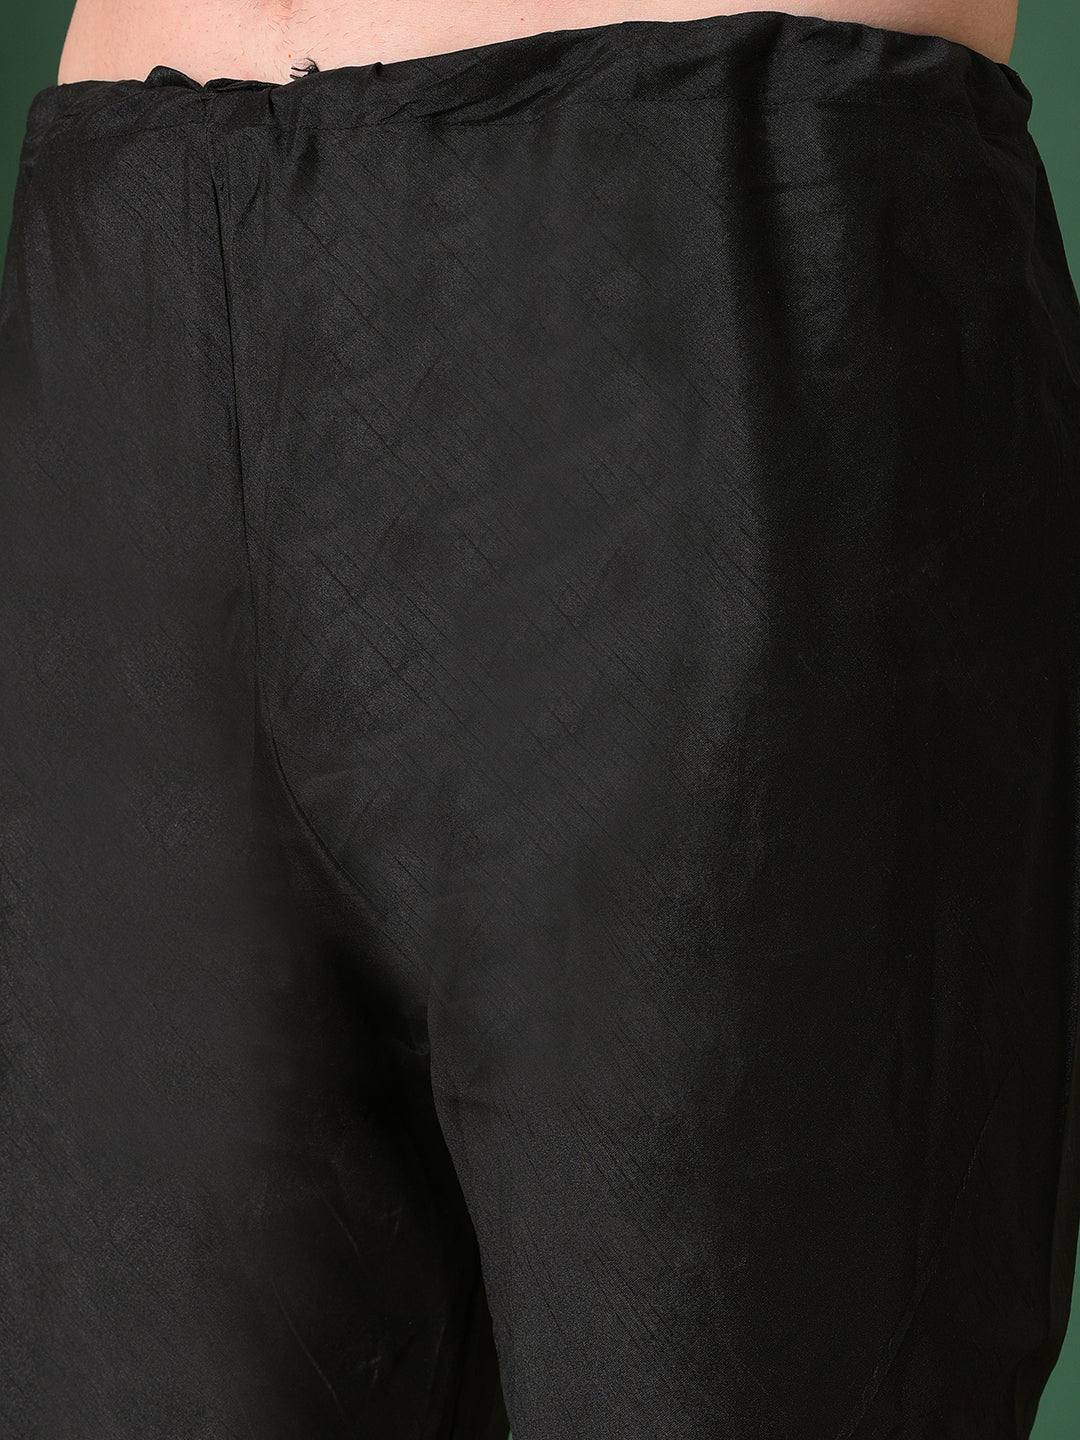 Hangup Men's Ethnic Black Long Kurta Pyjama and Nehru Jacket Set